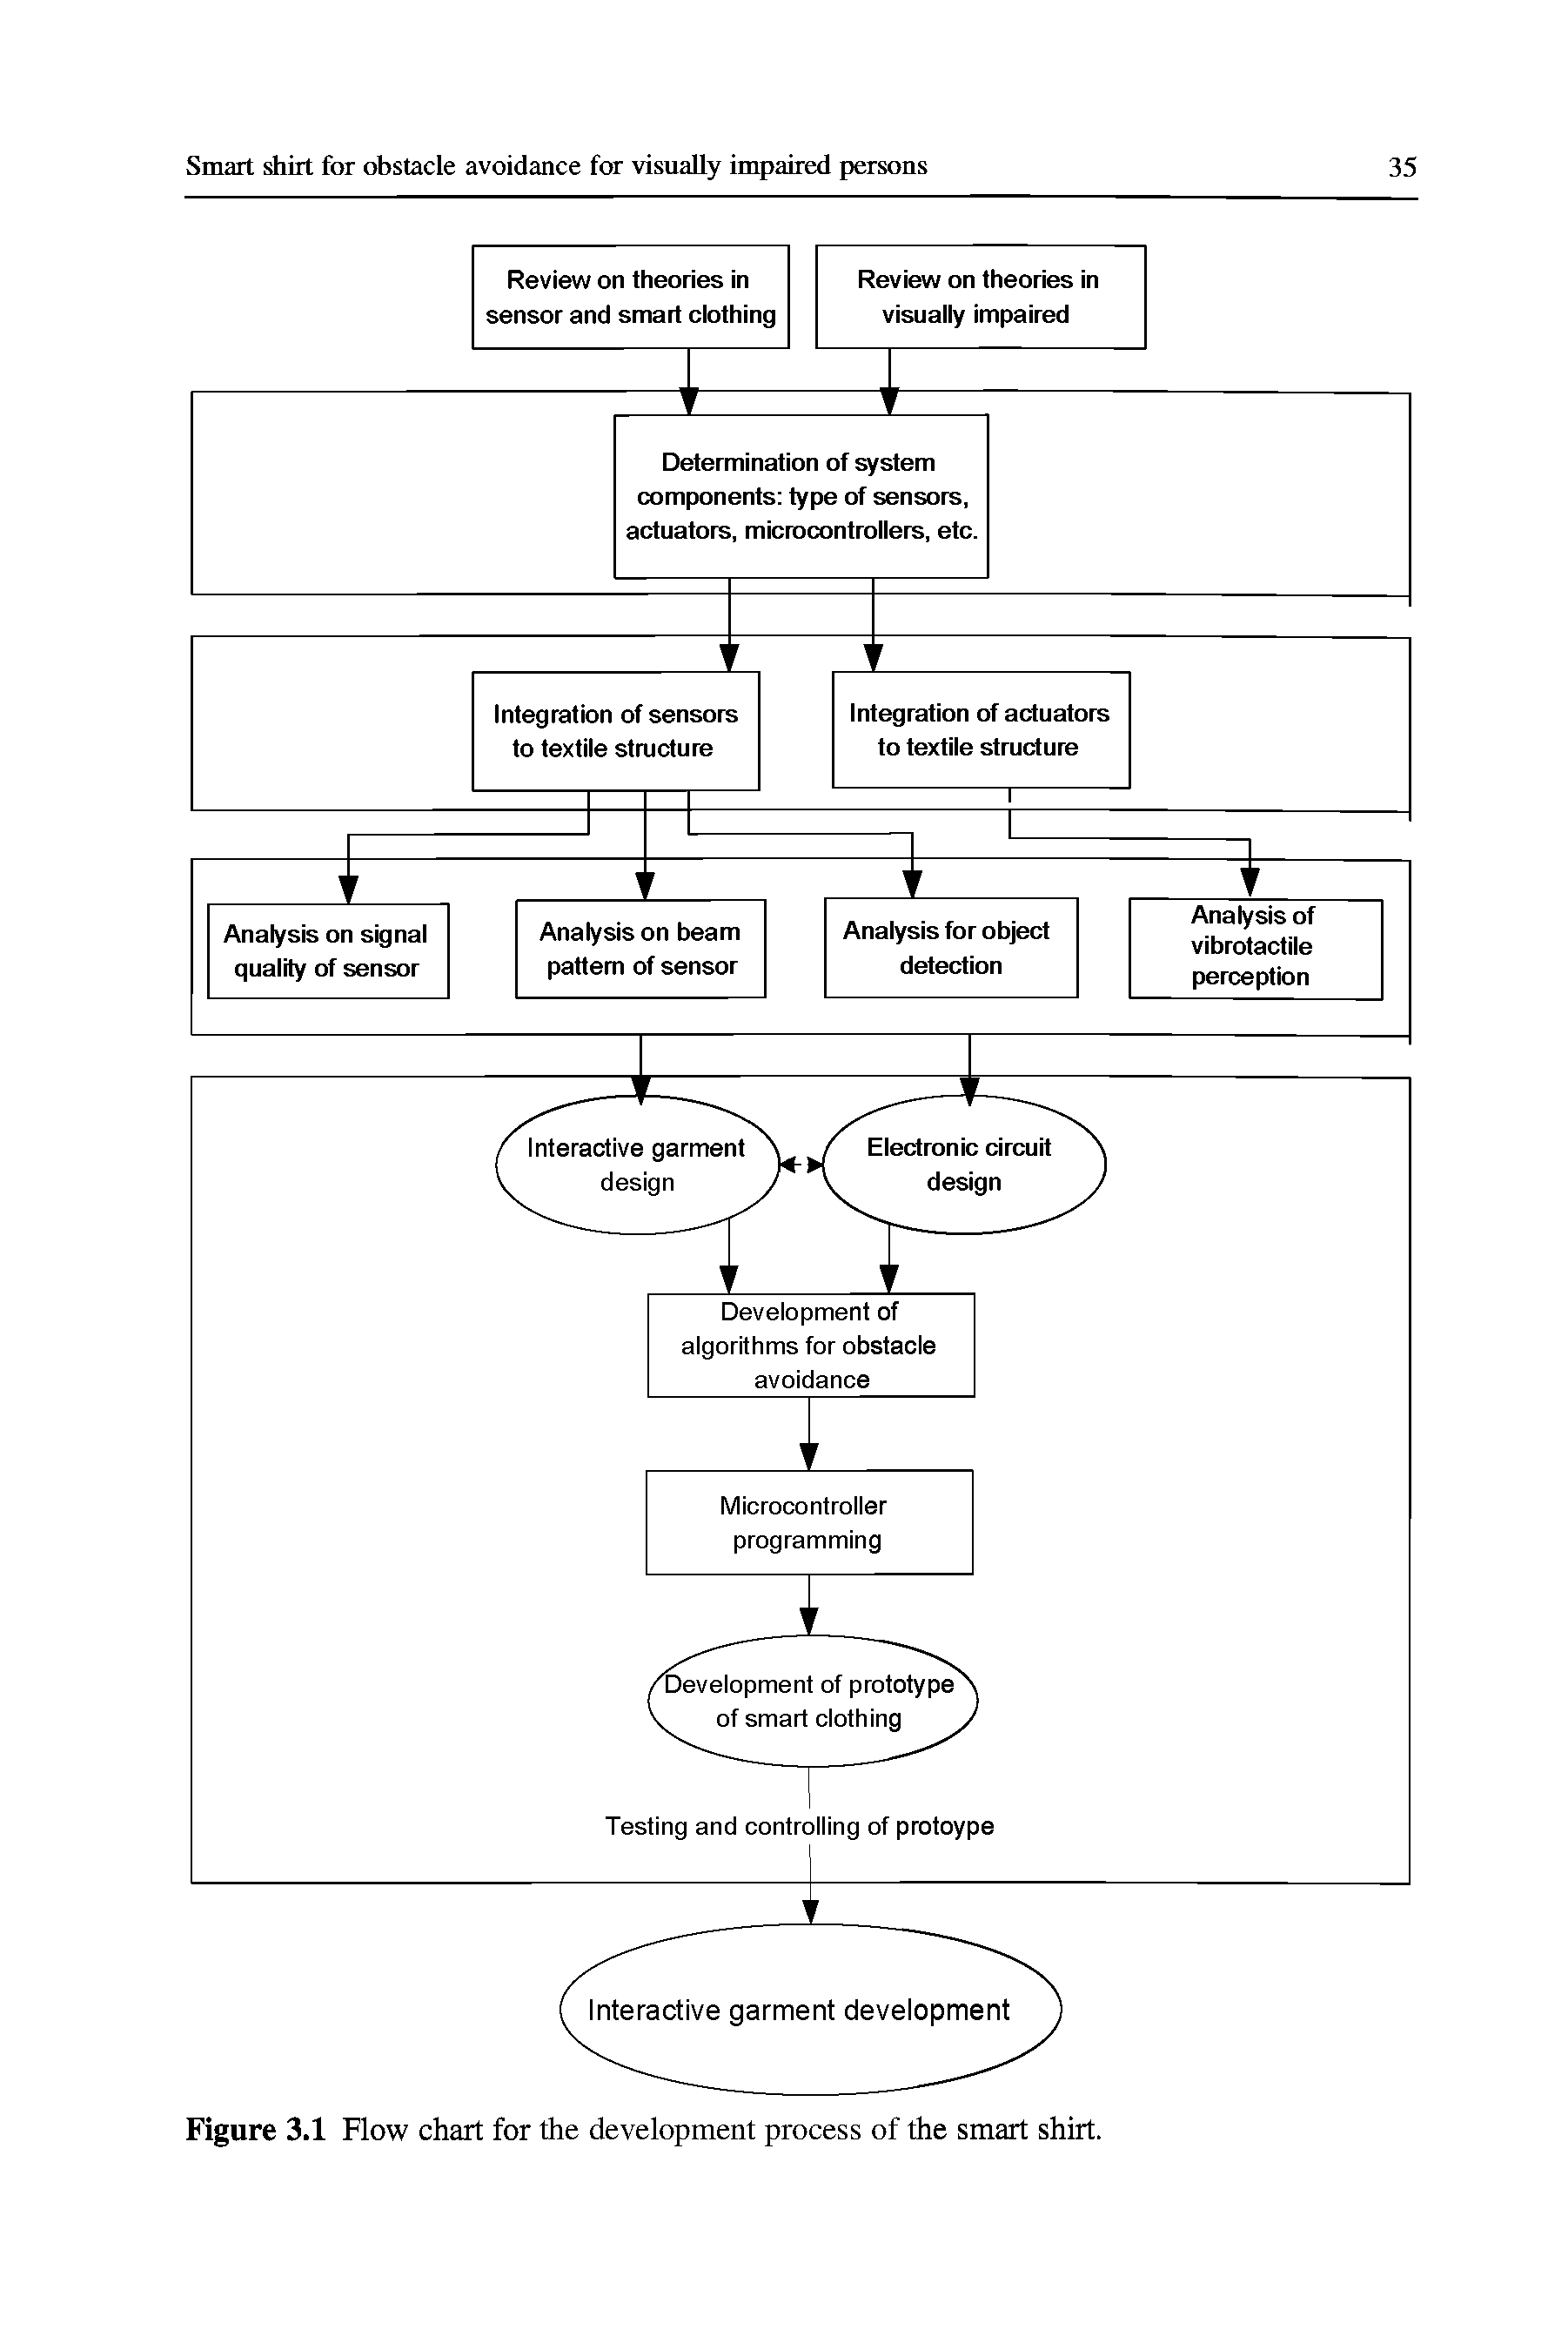 Figure 3.1 Flow chart for the development process of the smart shirt.